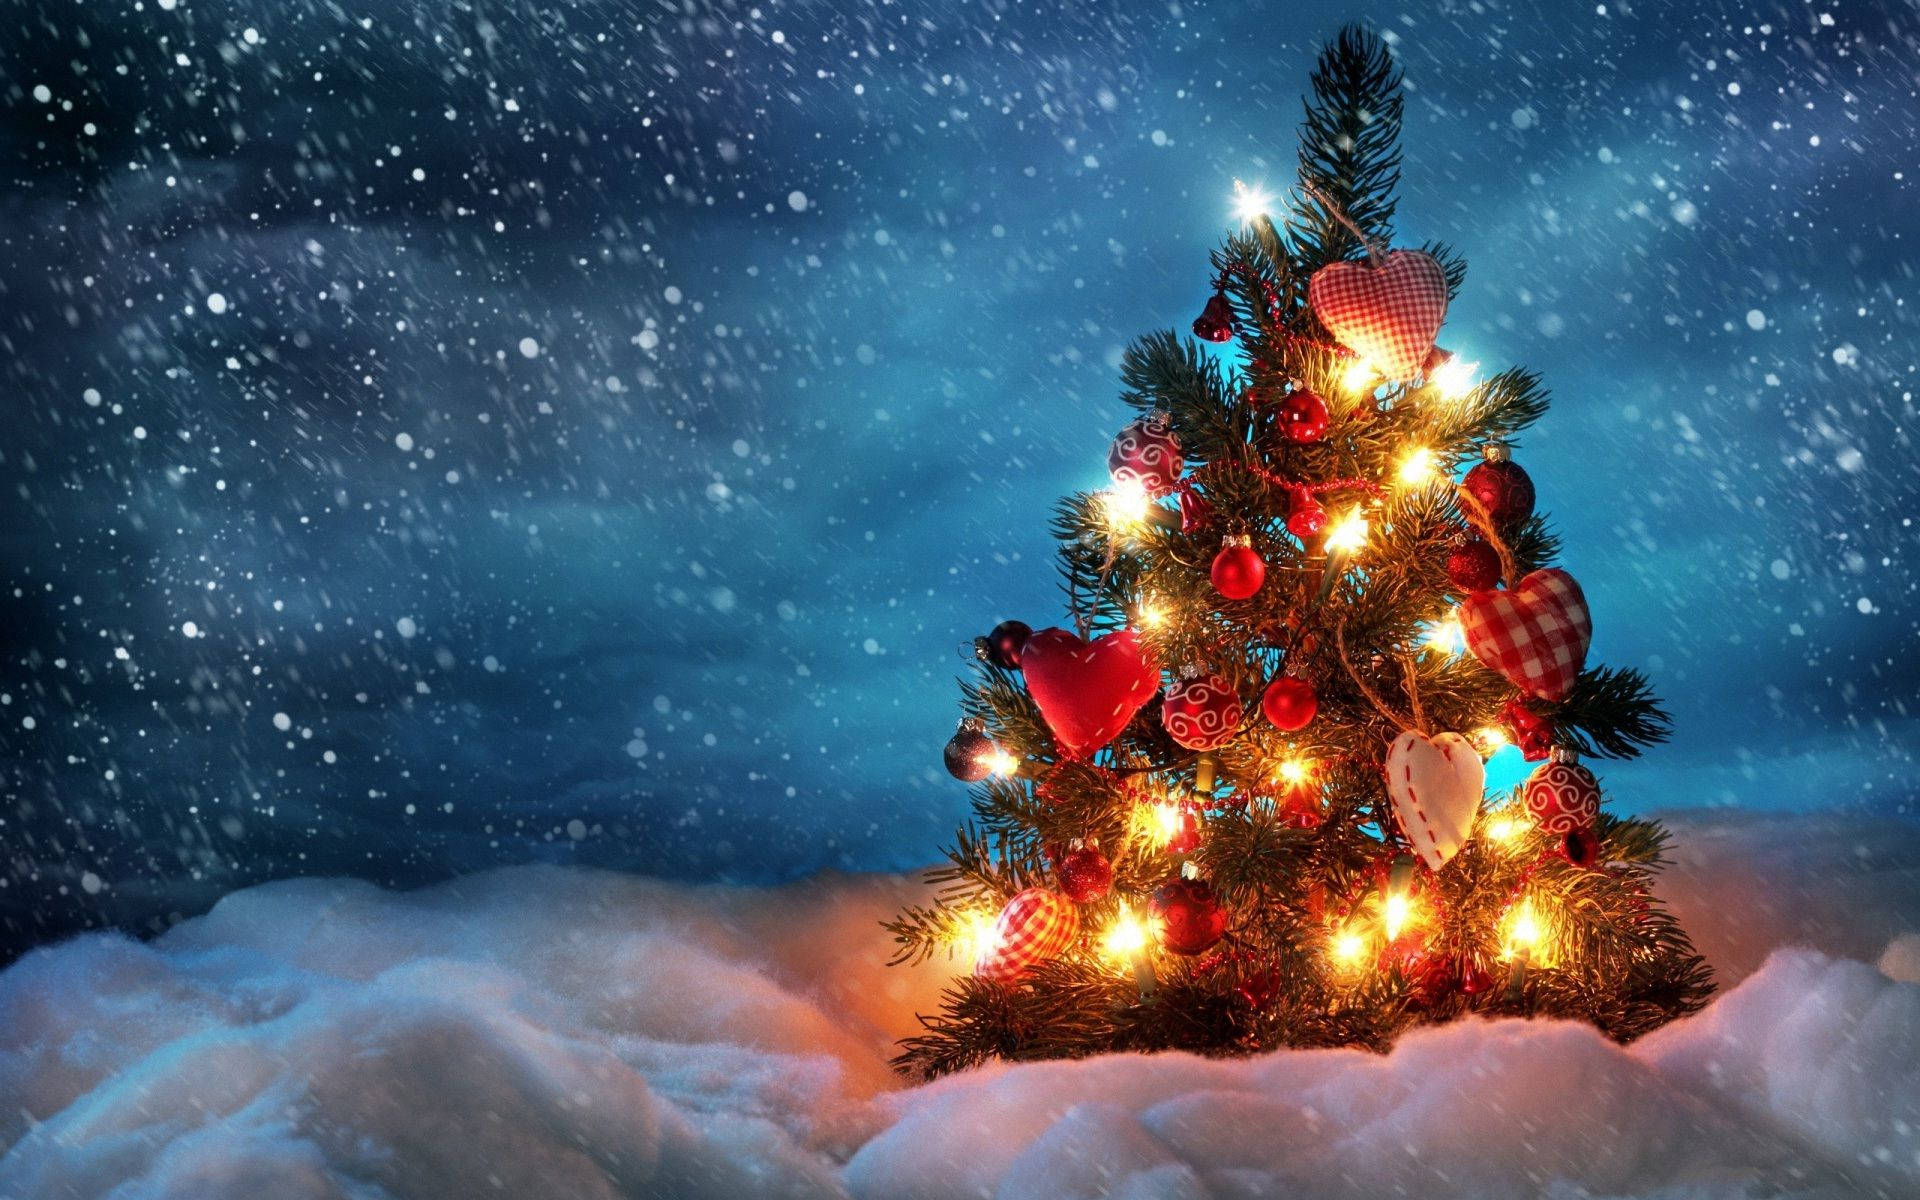 Small Christmas Tree On Snowy Night Background